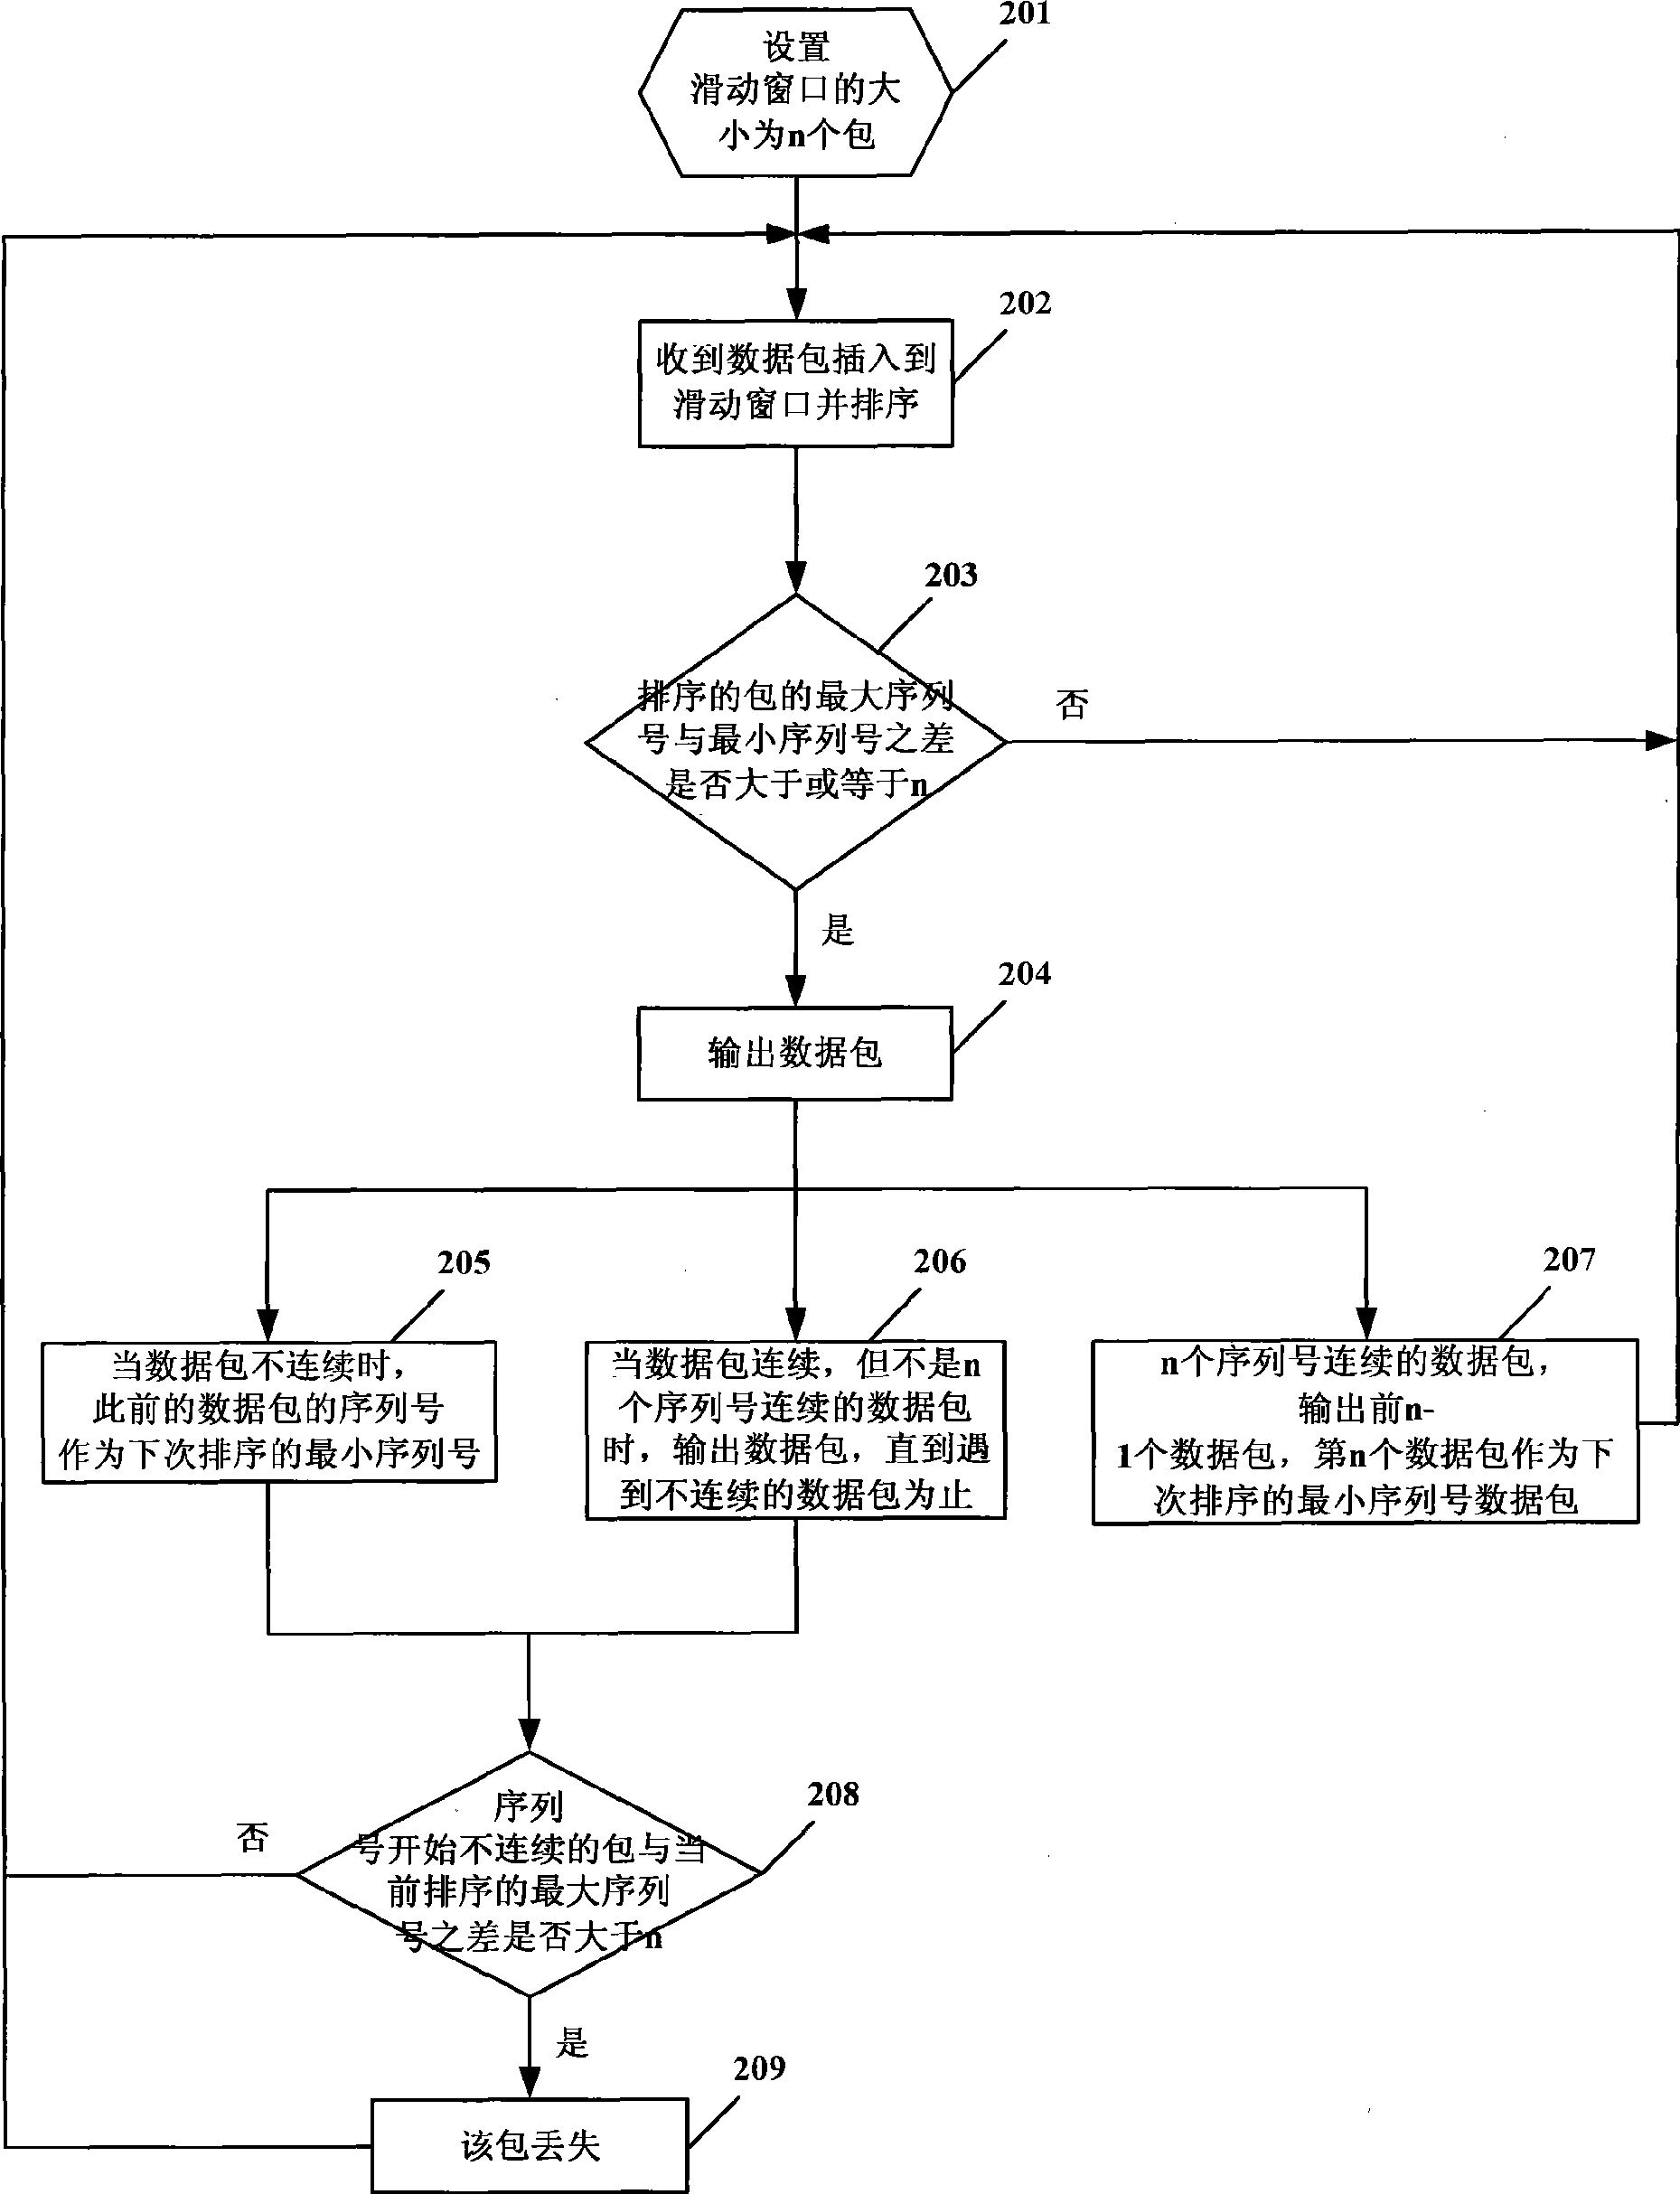 Data transmission method based on RTP